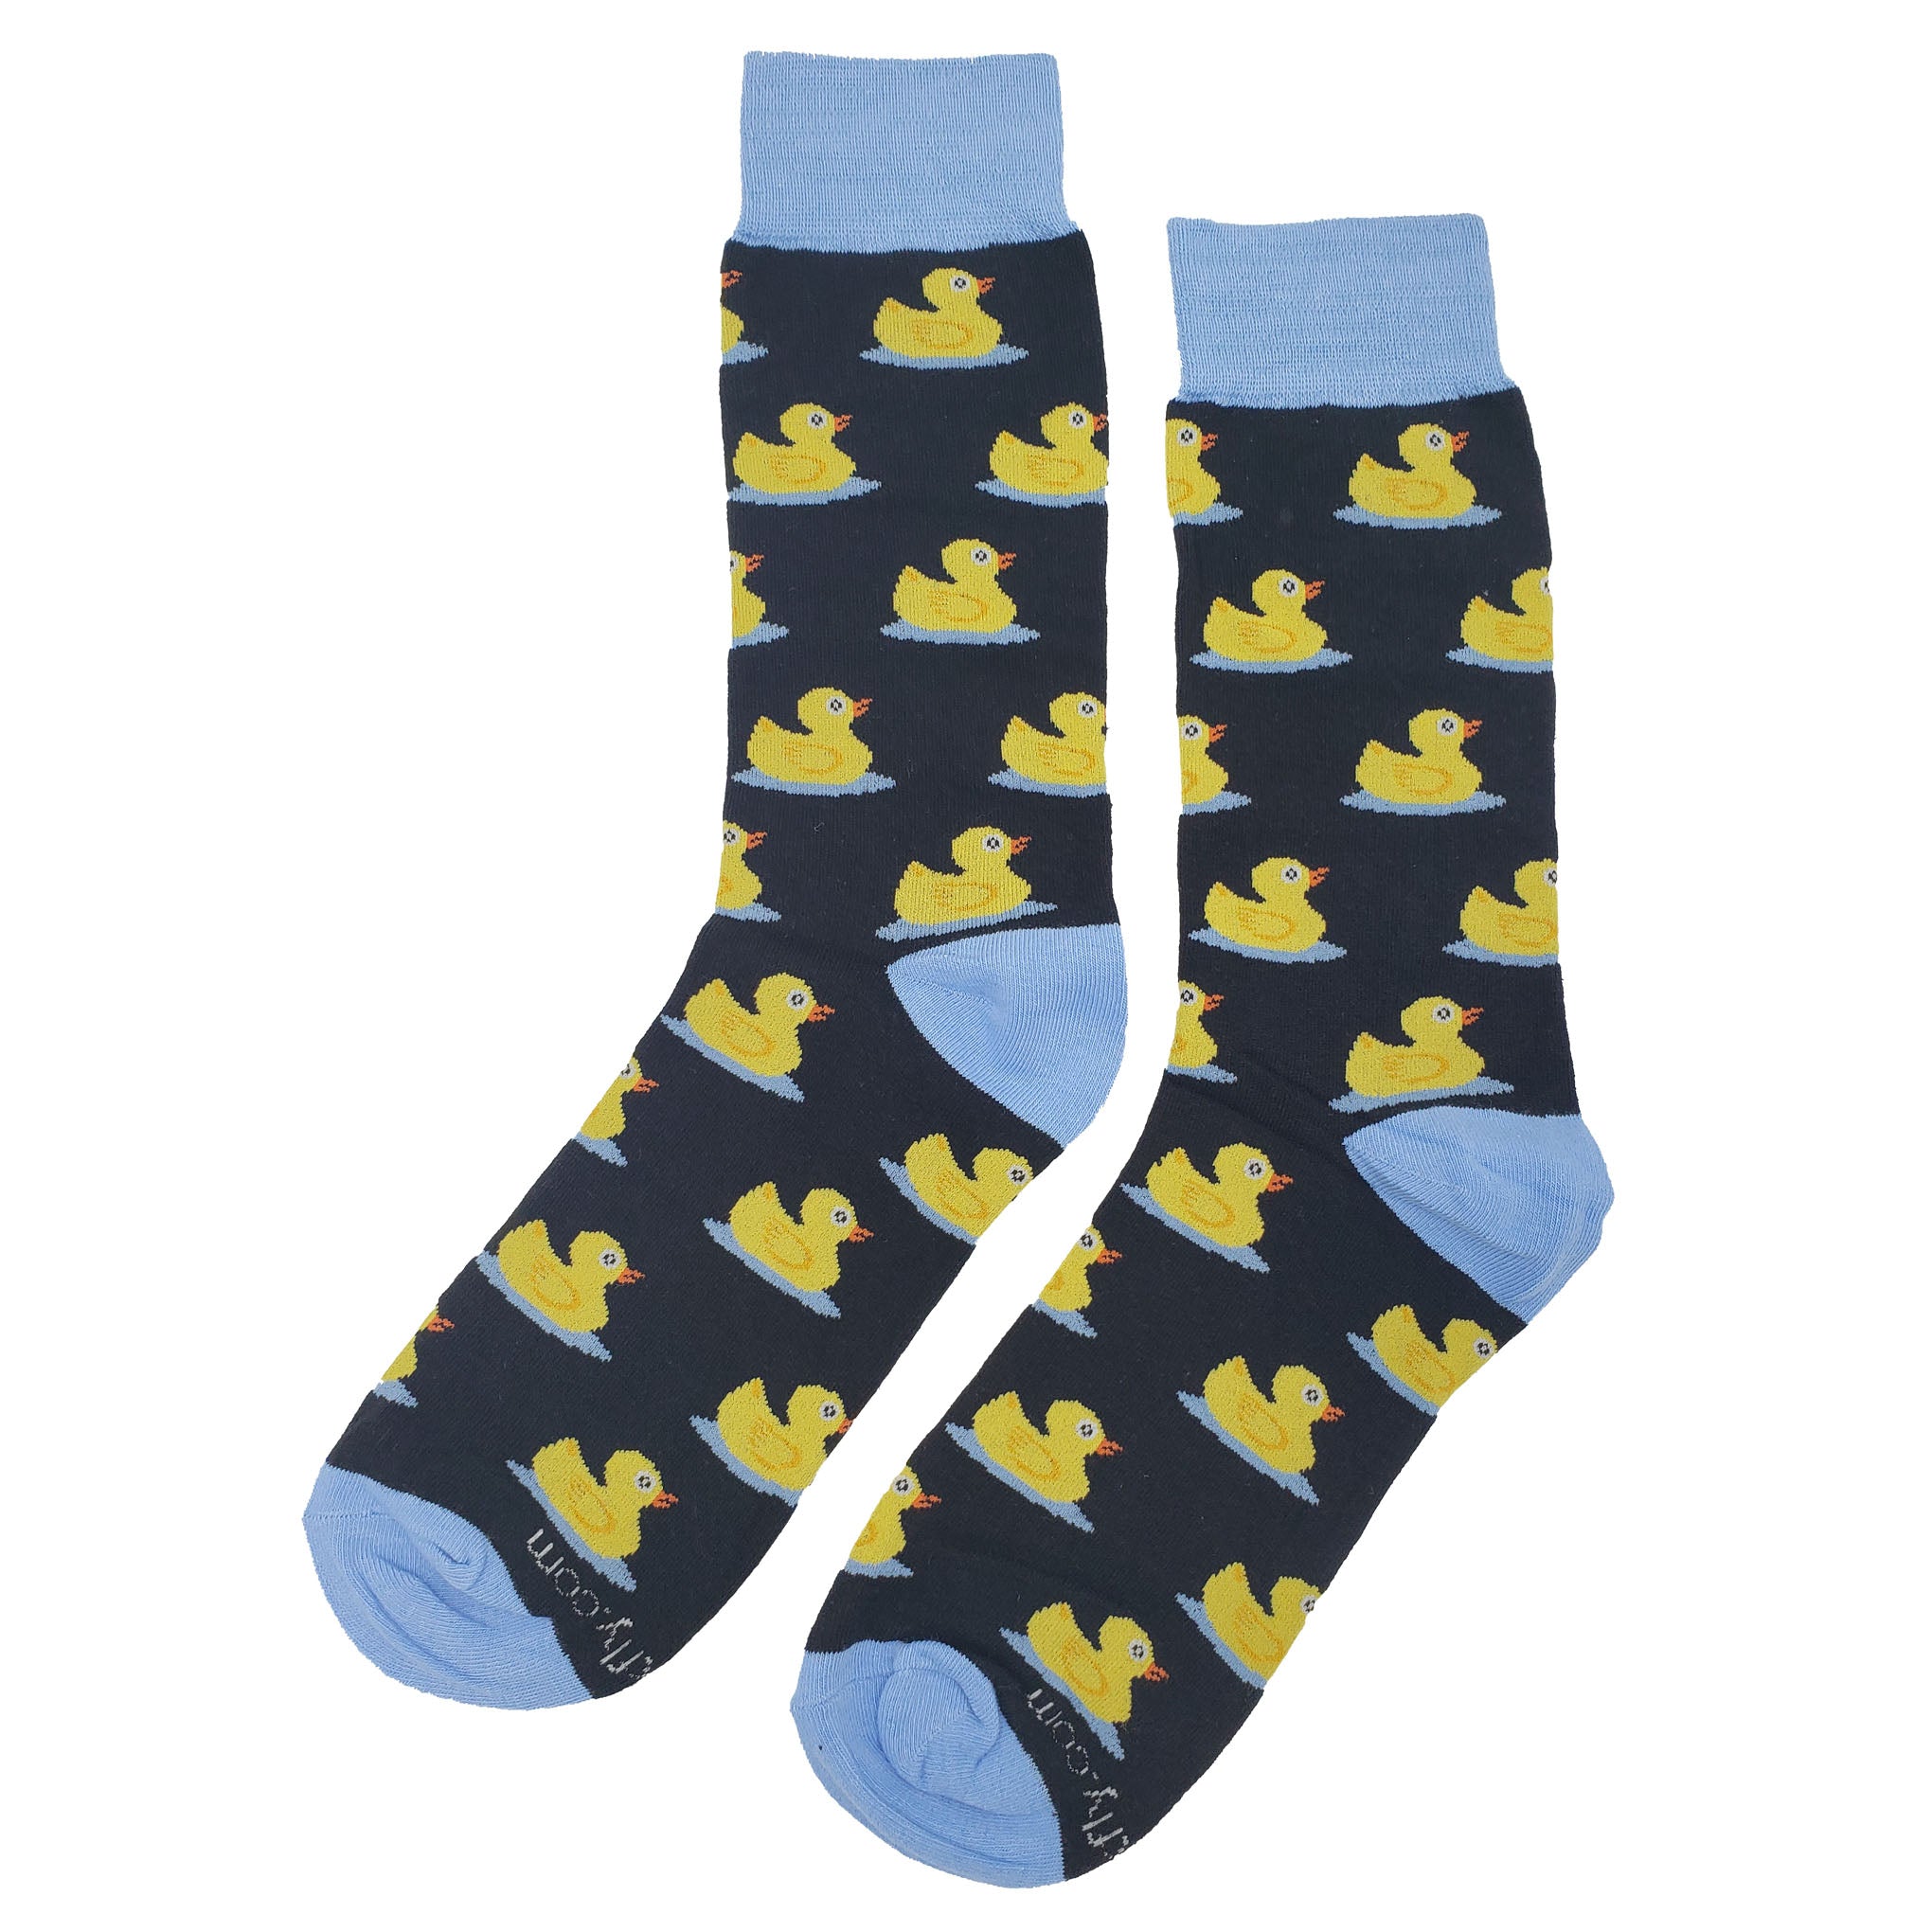 Fun Rubber Duck Socks - Fun and Crazy Socks at Sockfly.com